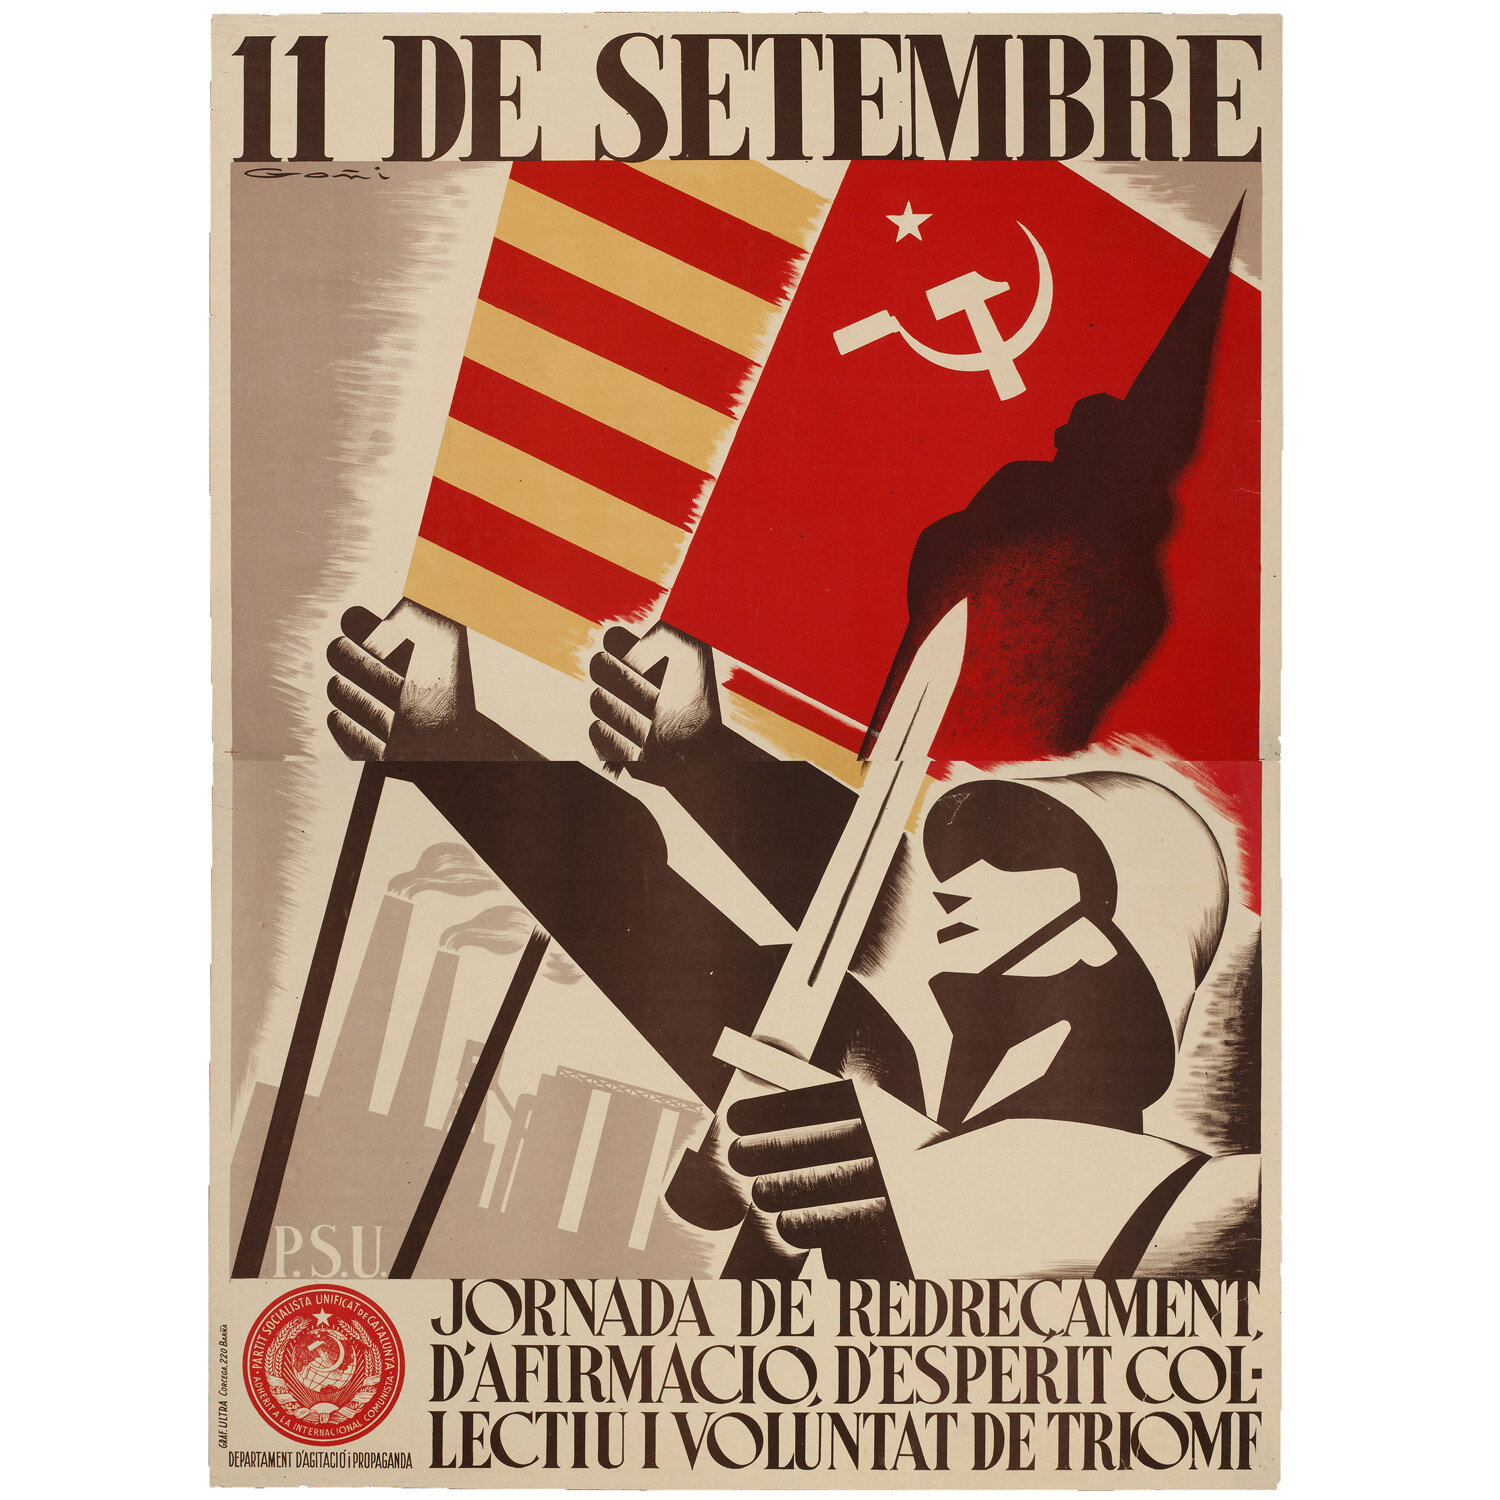 WAR SPANISH CIVIL ENLIST SOCIALISM ANTI FASCIST SPAIN OLD POSTER 2862PYLV 